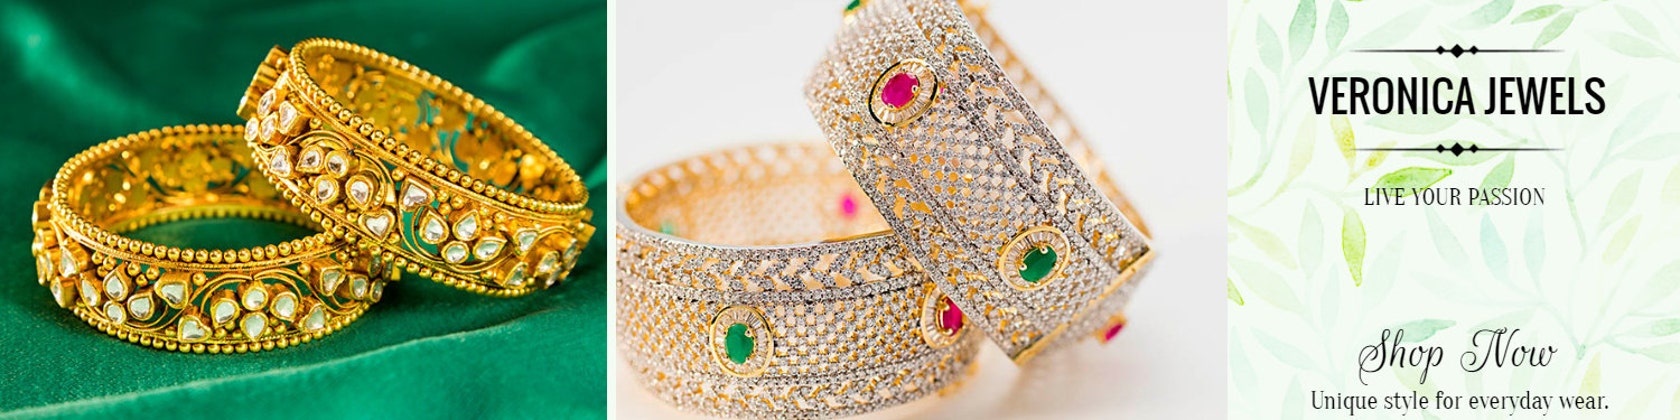 14ct Rose Gold Nail Design Cuff Bracelet - Veronica's Jewellery